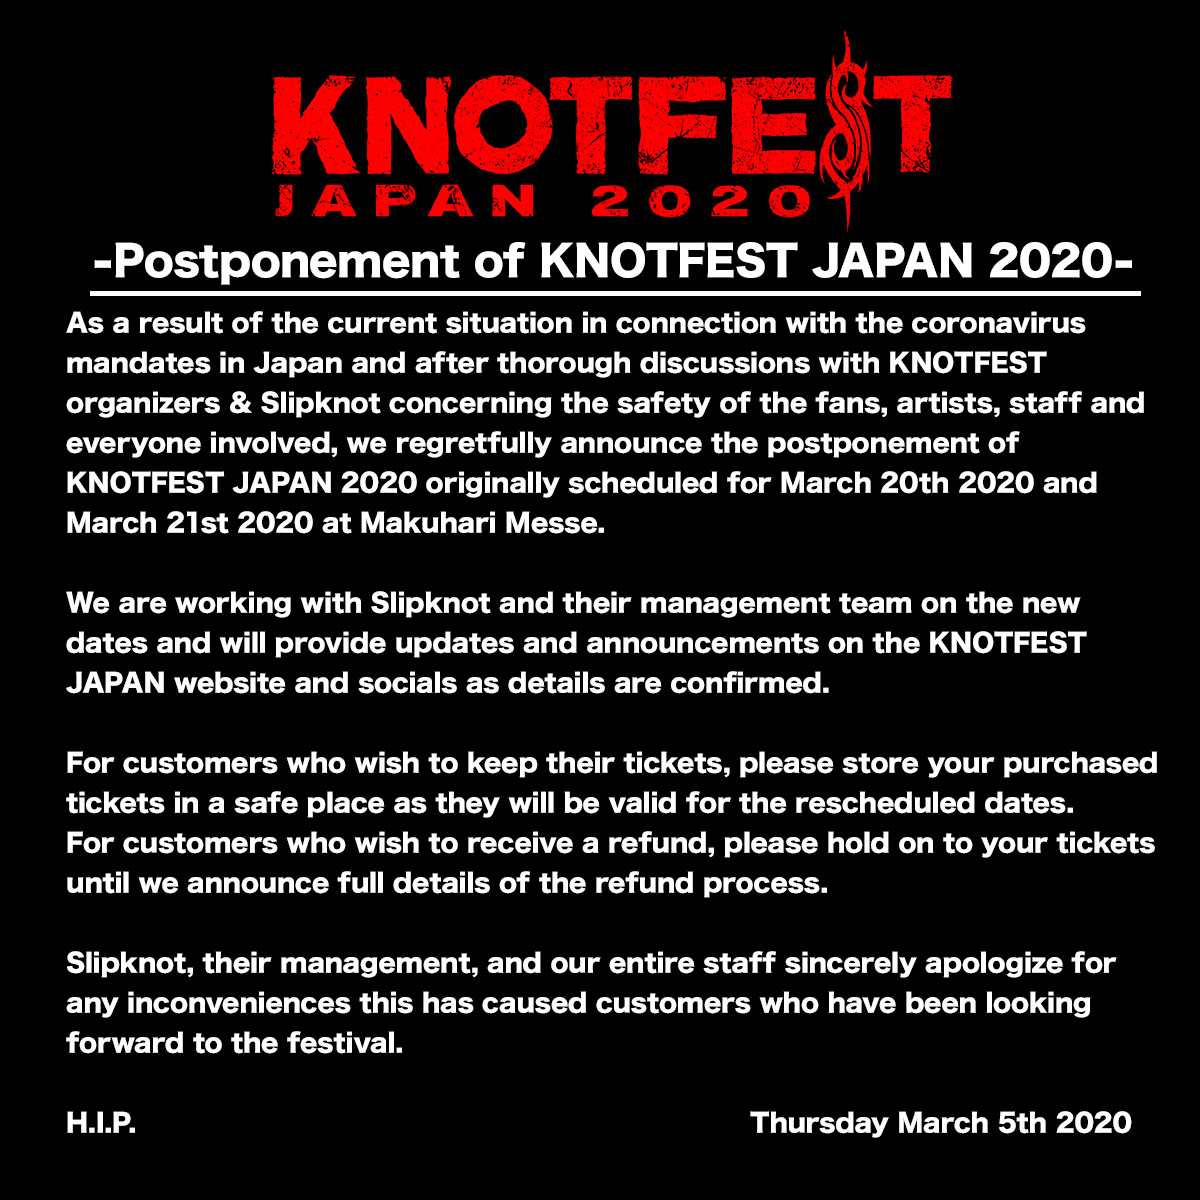 KNOTFEST JAPAN 2020 開催延期のお知らせ
knotfestjapan.com